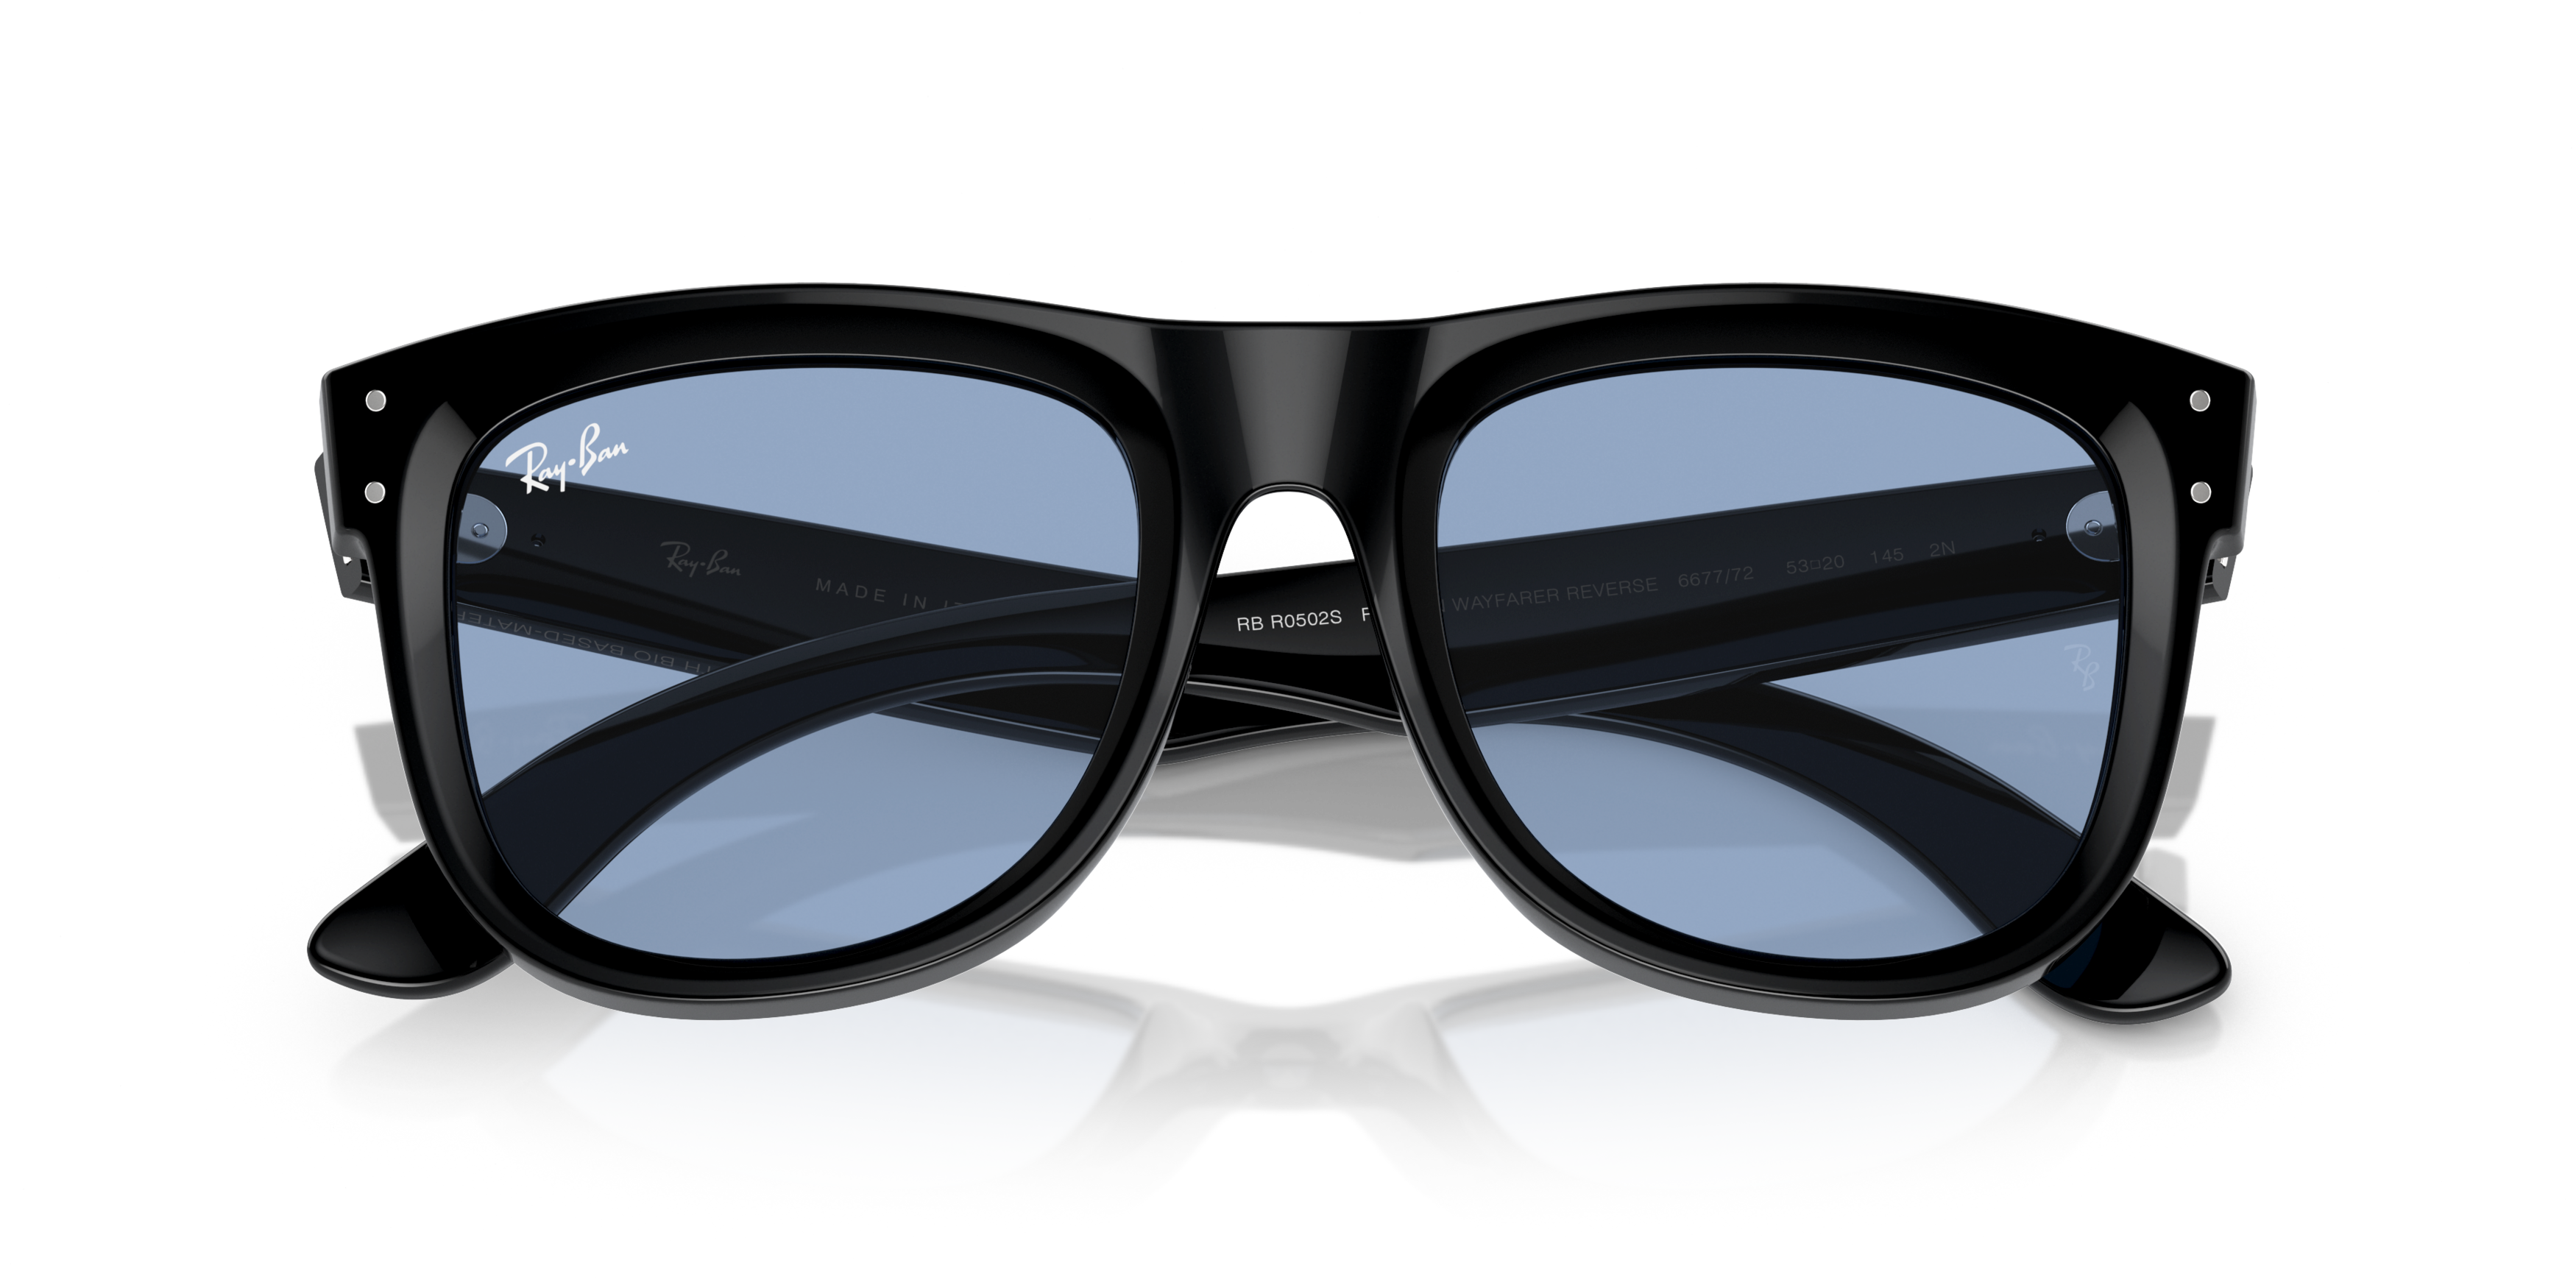 [products.image.folded] Ray-Ban Wayfarer Reverse RBR 0502S Sunglasses